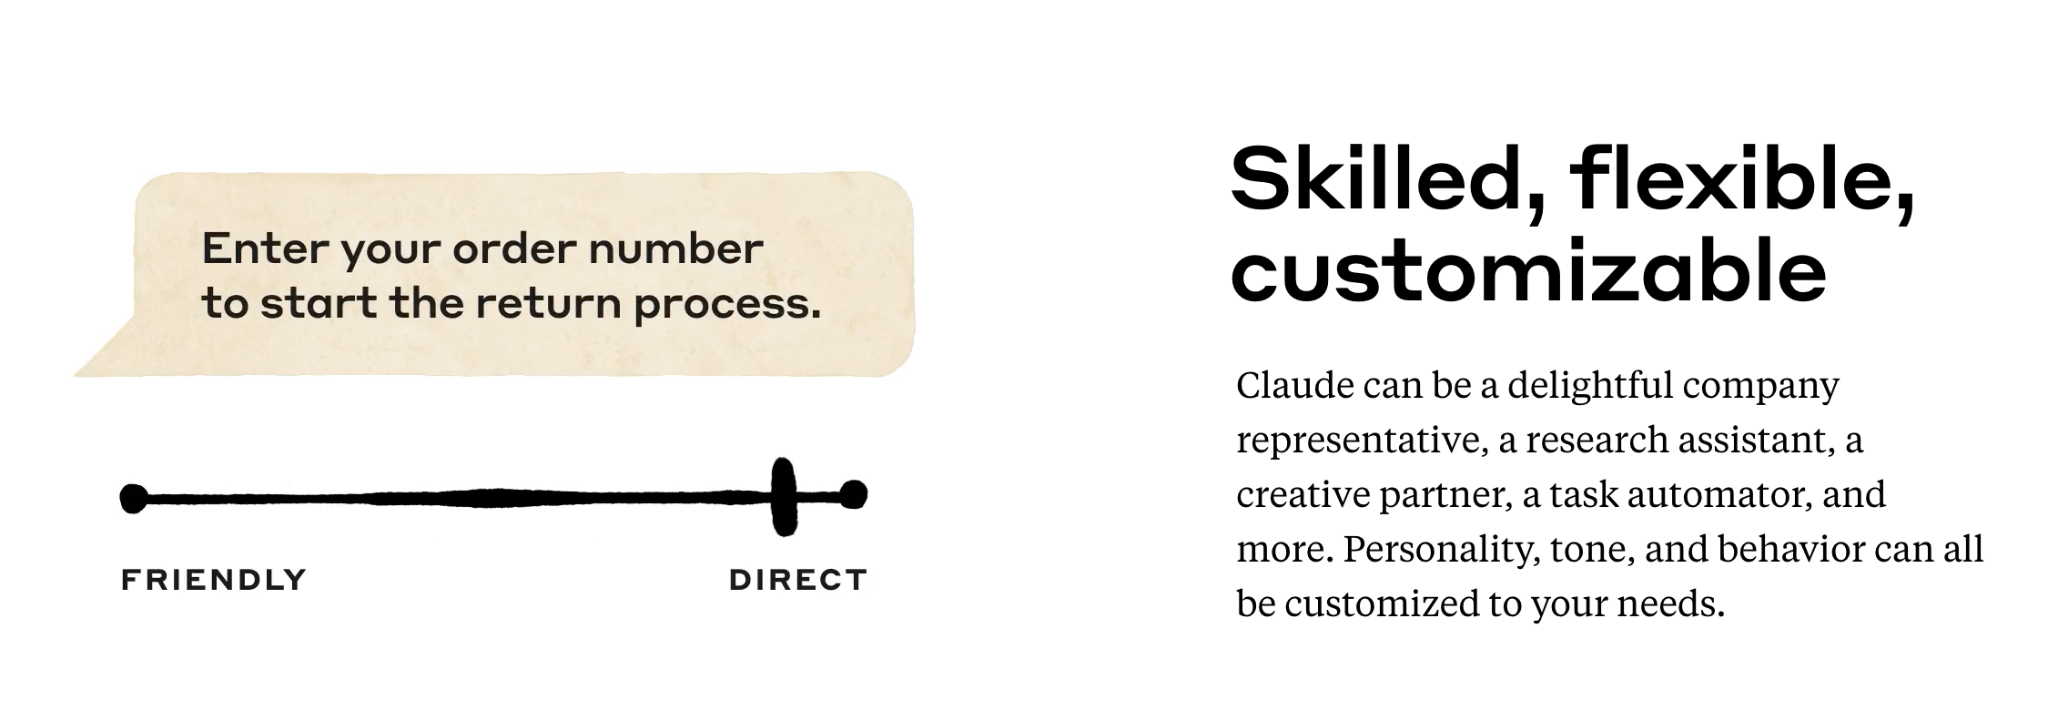 Claude - "Skilled, flexible, customizable"